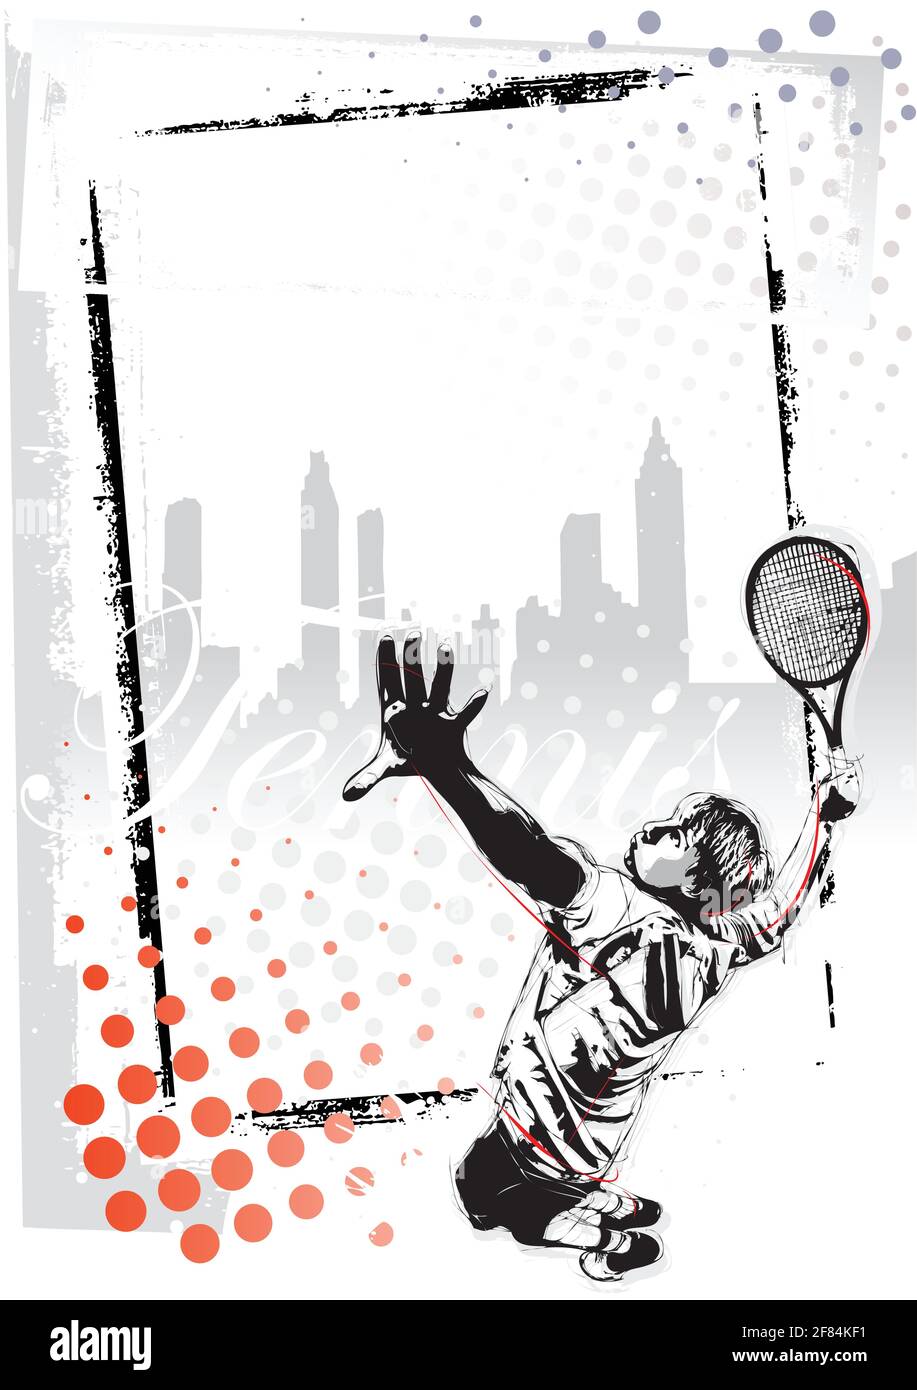 tennis poster background Stock Vector Image & Art - Alamy